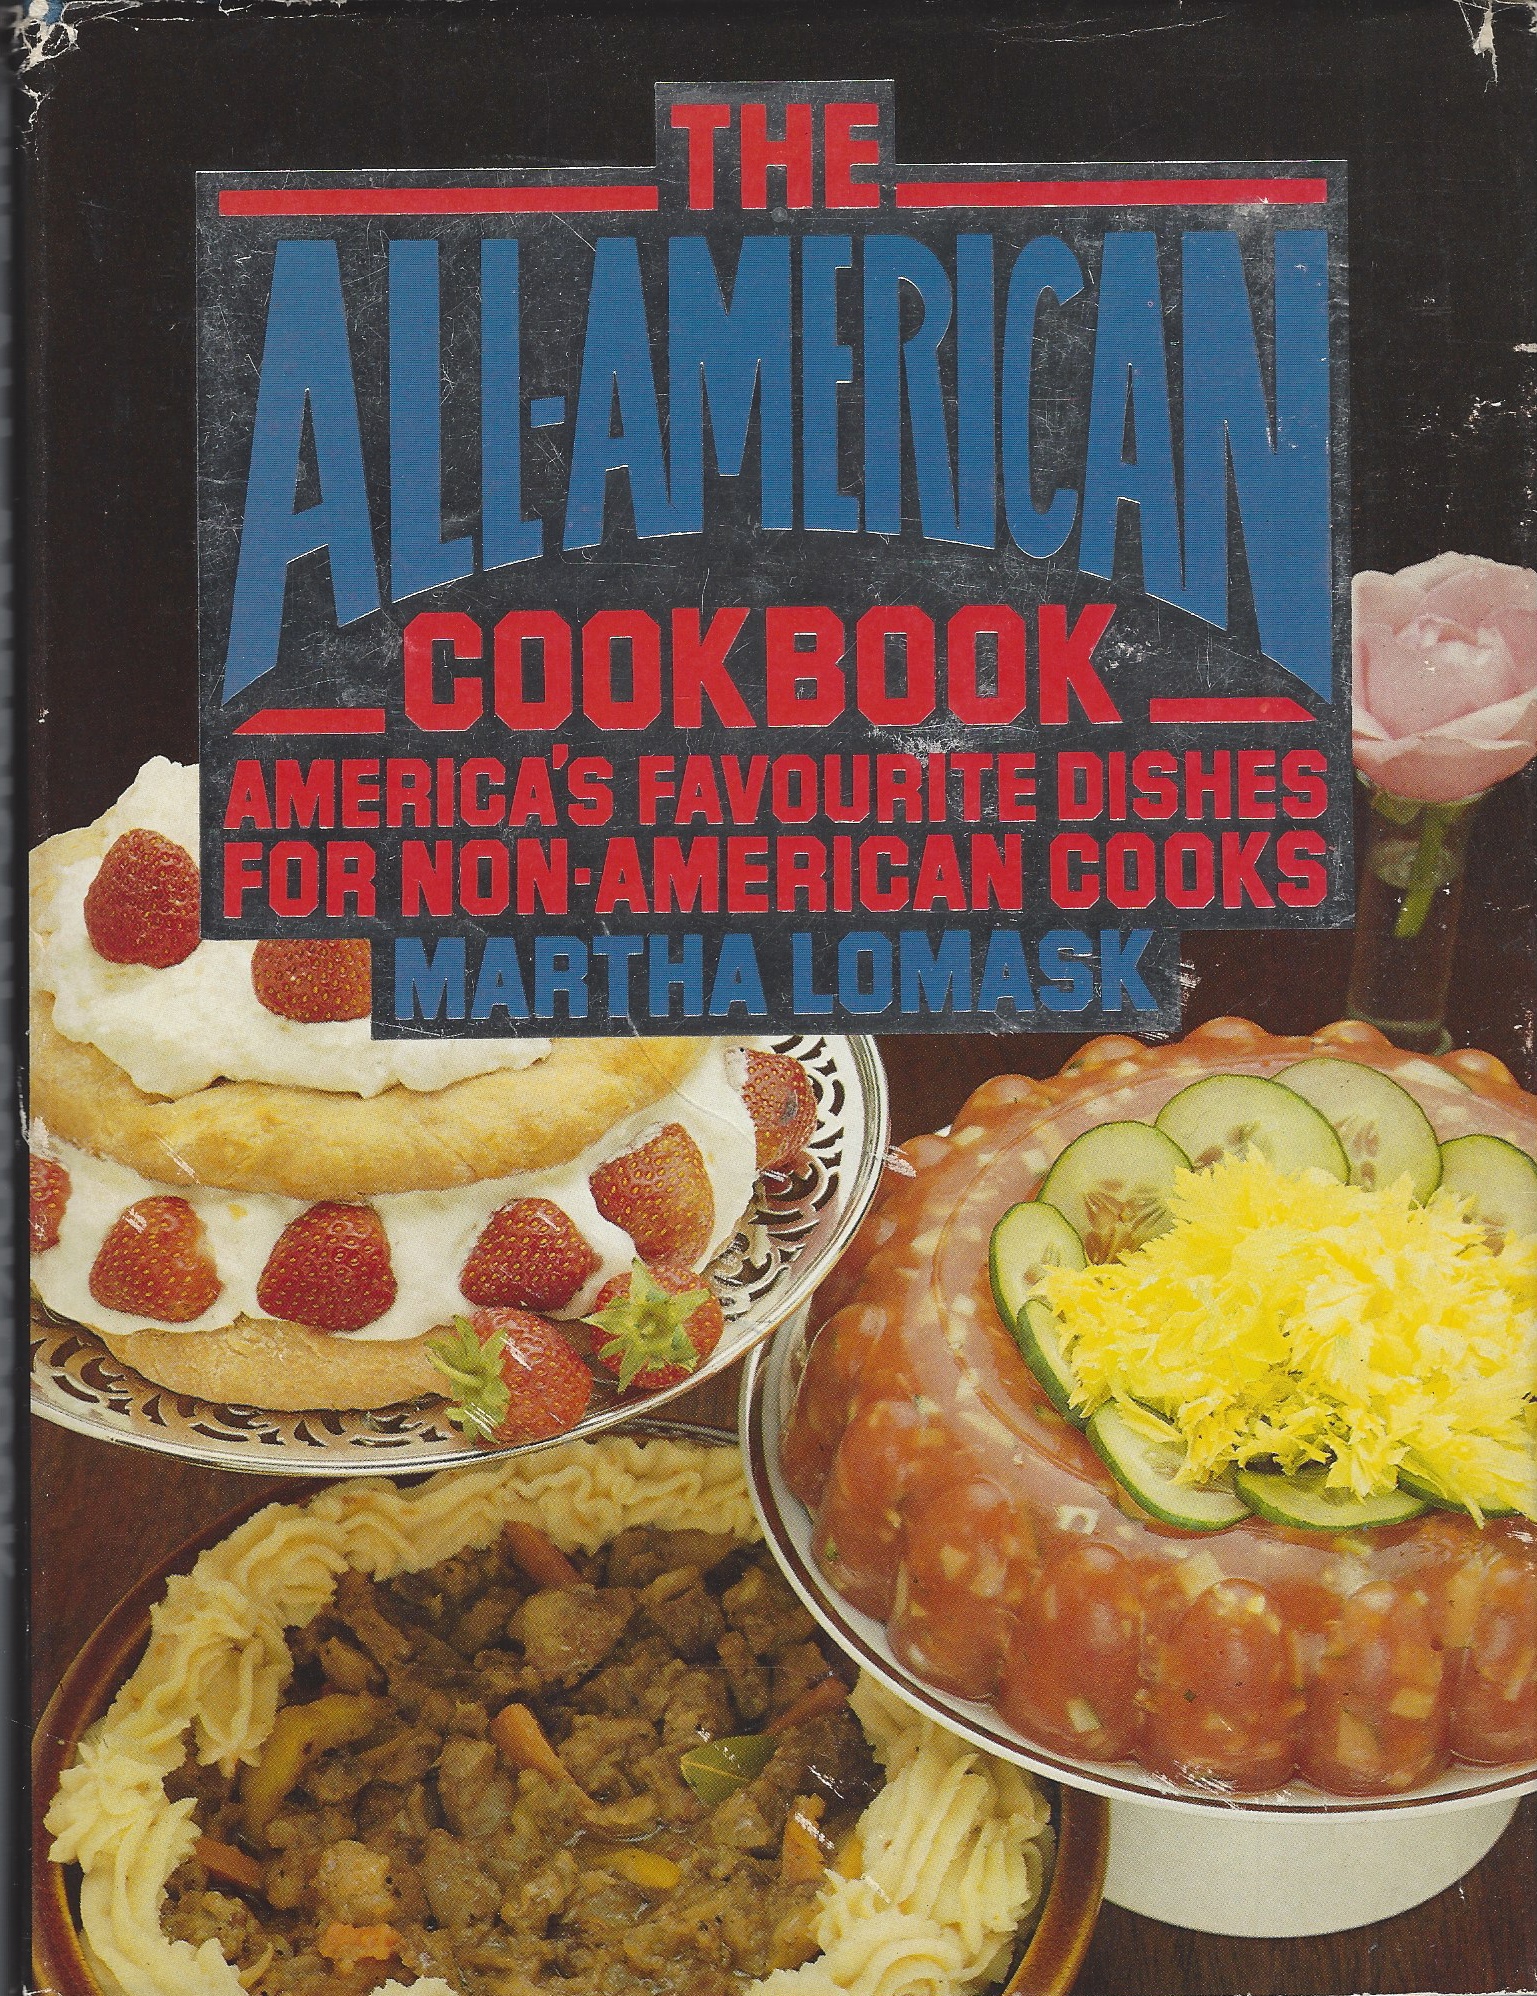 LOMASK MARTHA - All-American Cookbook: America's Favourite Dishes for Non-American Cooks